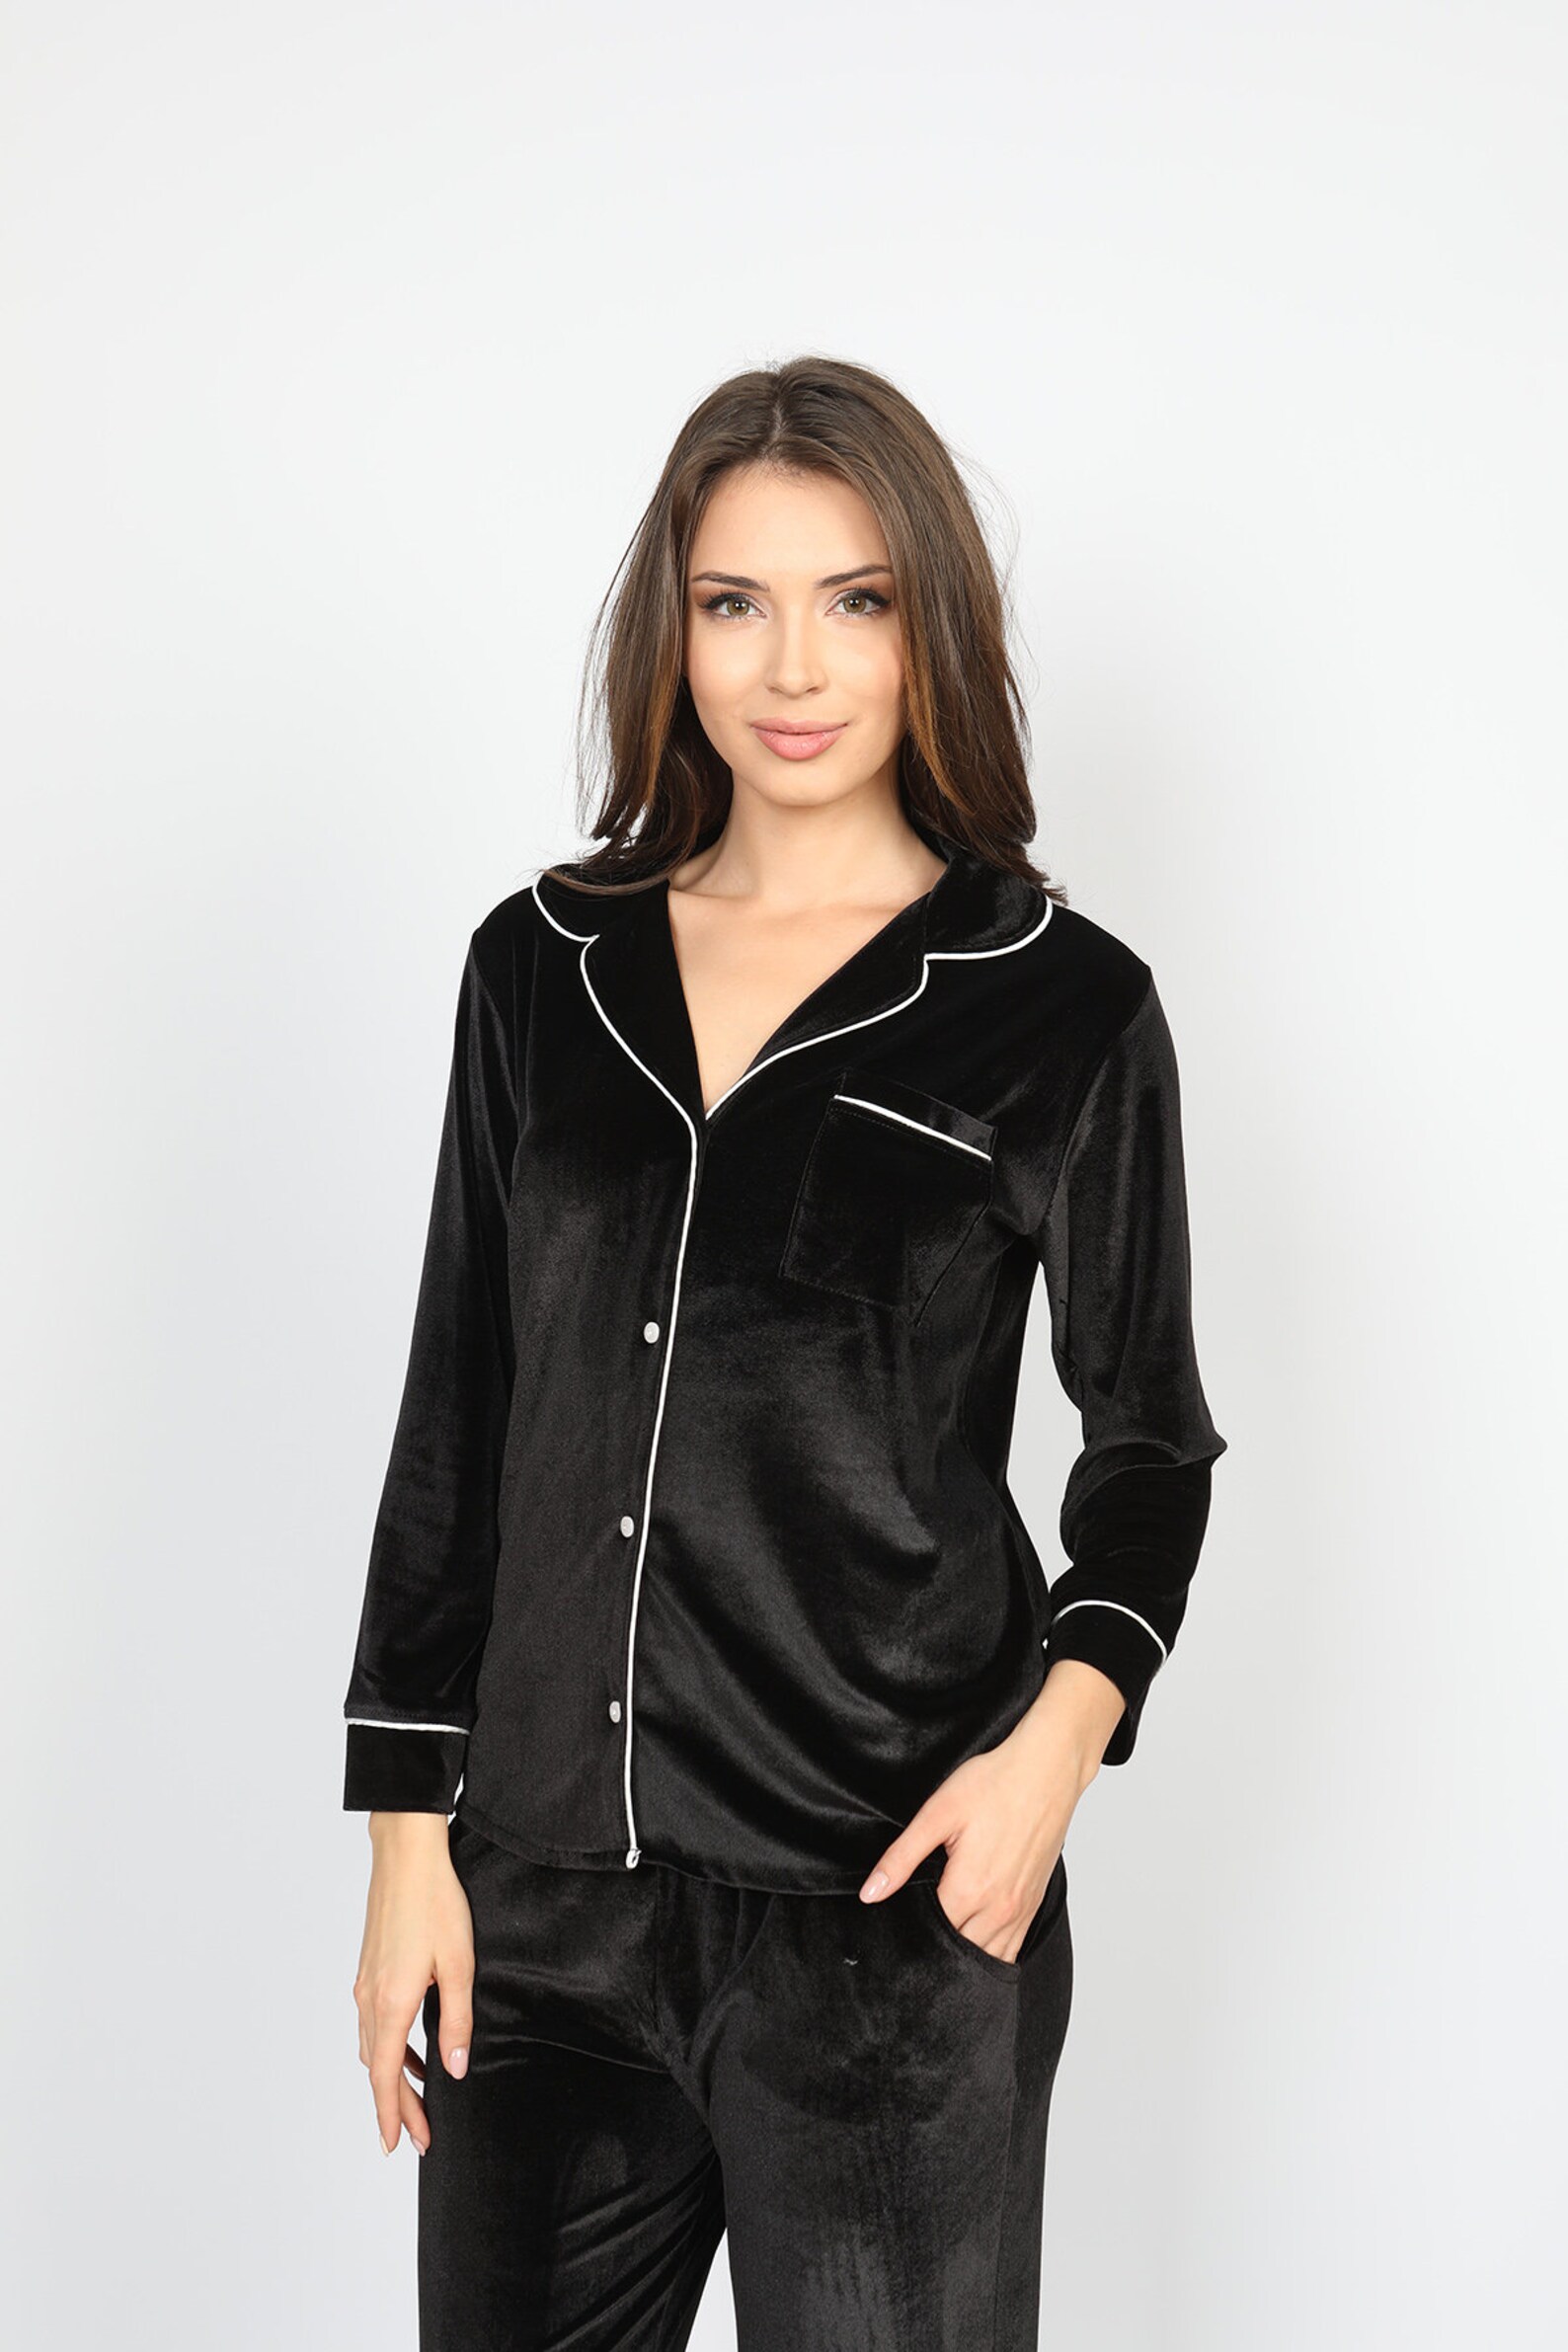 Velvet Pajama Set Long Sleeve Women Nightwear Sleepwear | Etsy